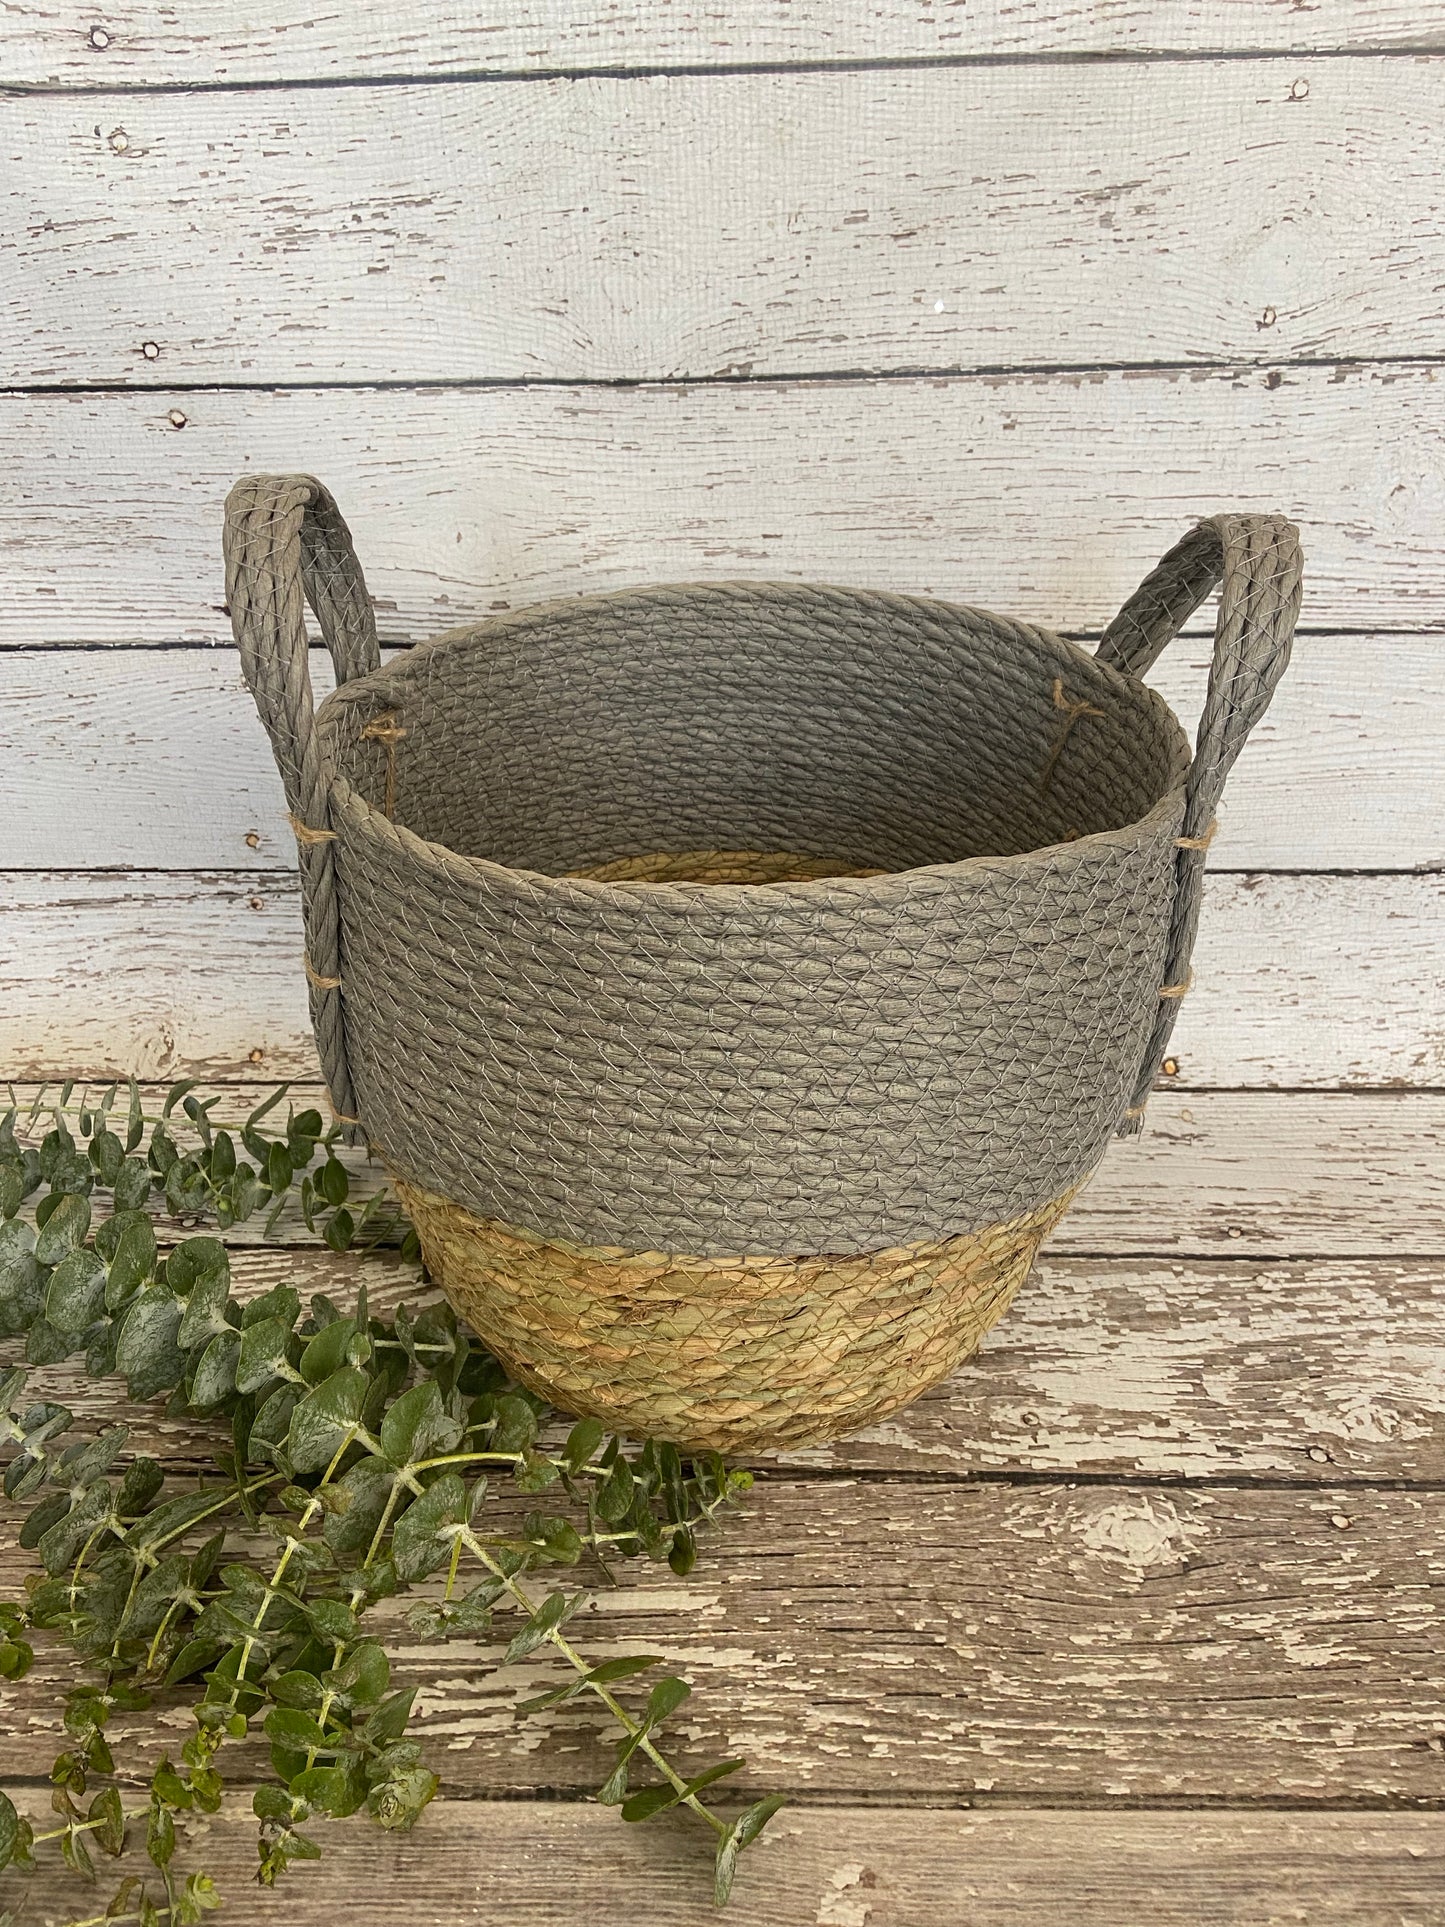 Grey straw baskets